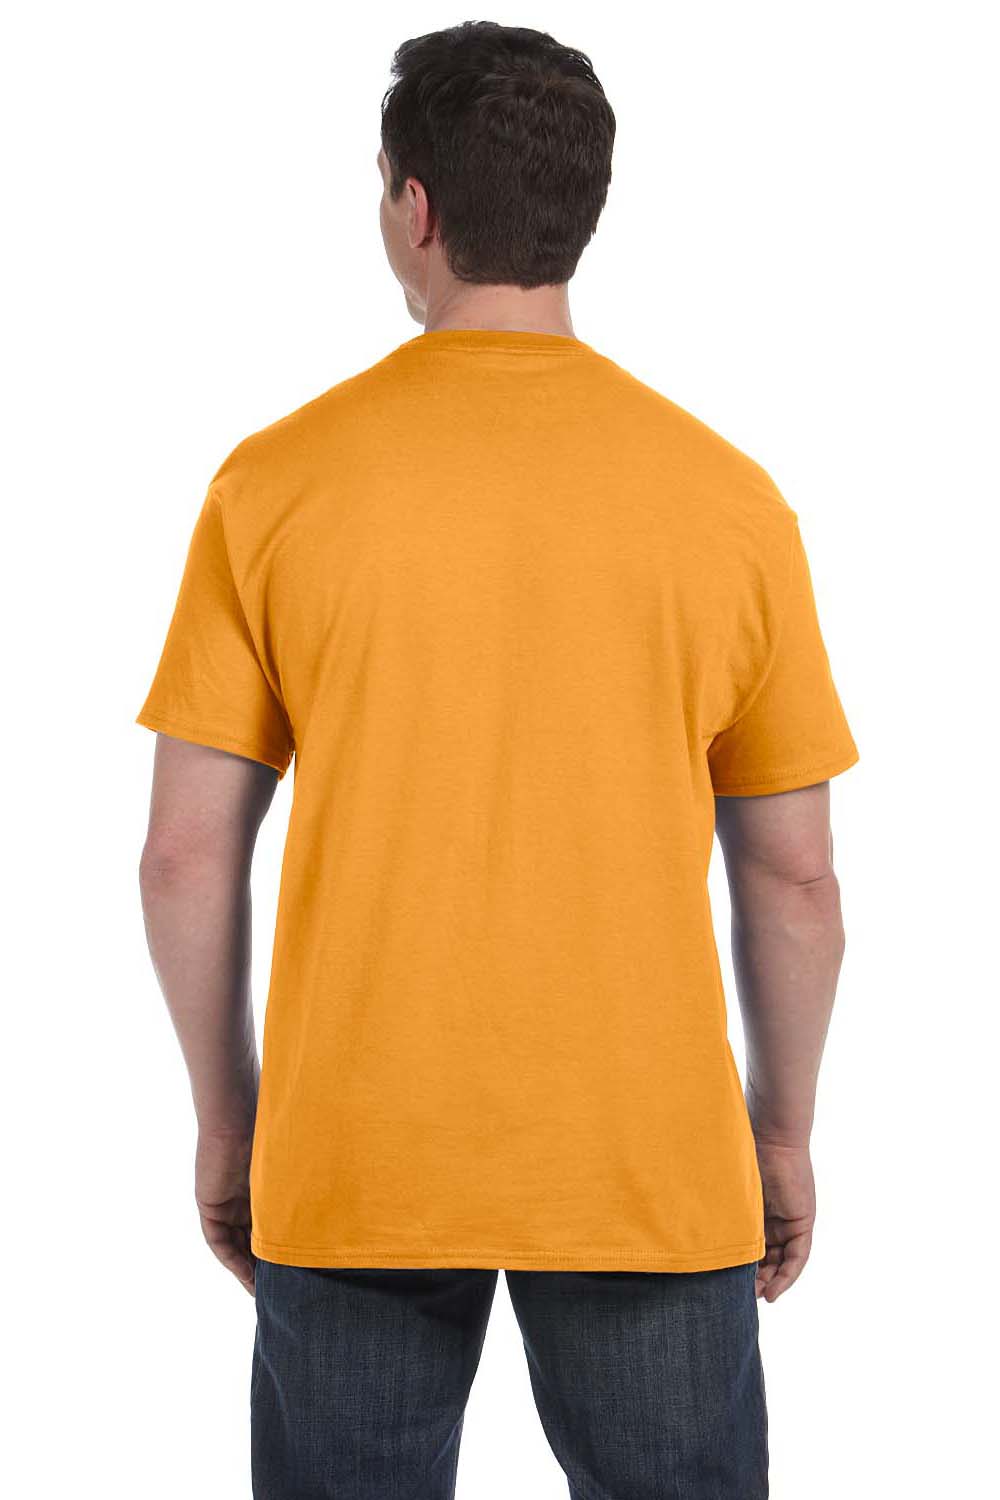 Hanes H5590 Mens ComfortSoft Short Sleeve Crewneck T-Shirt w/ Pocket Gold Back